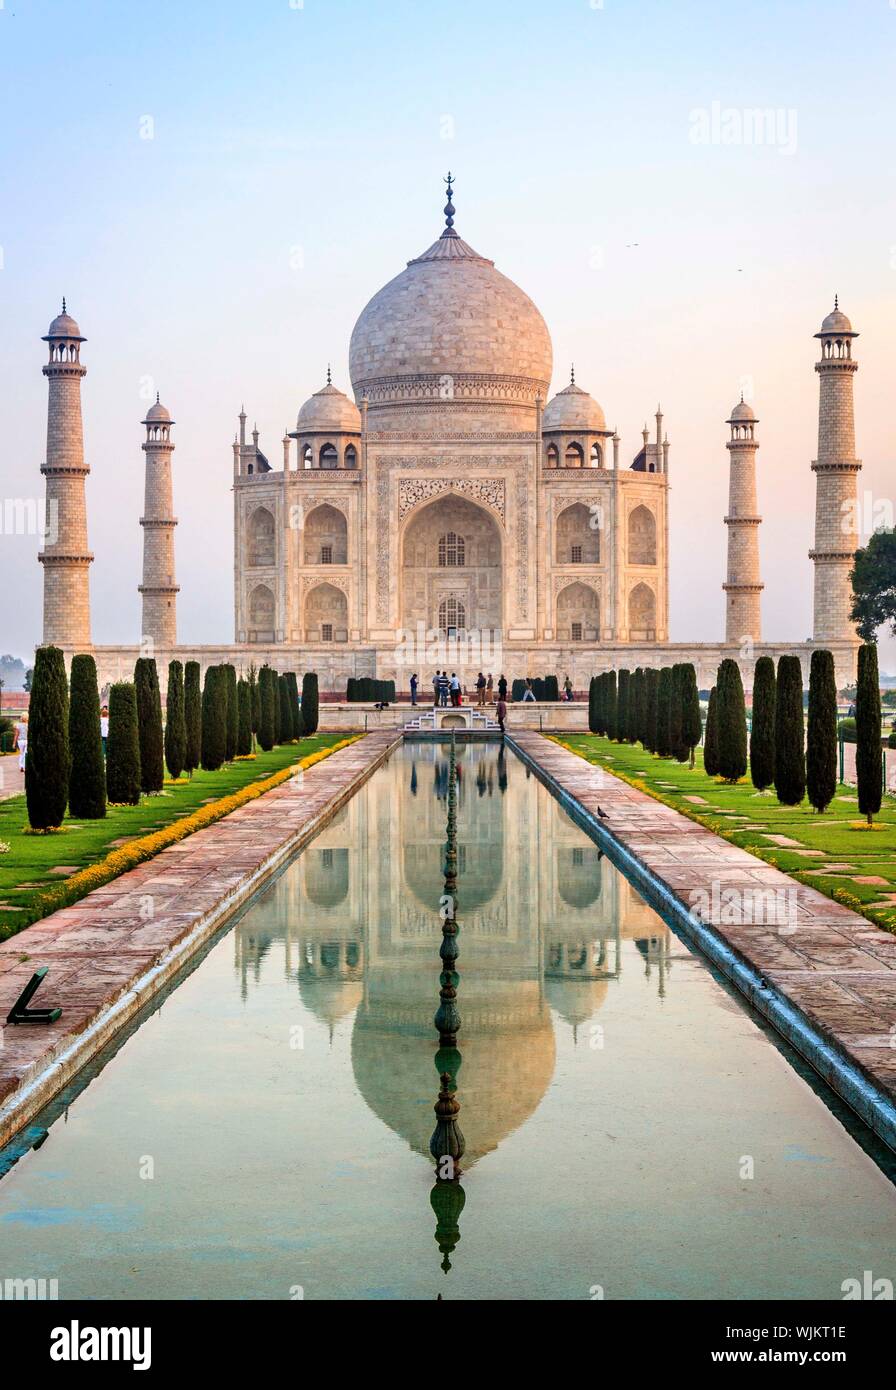 Taj Mahal Reflection Pool Hi Res Stock Photography And Images Alamy